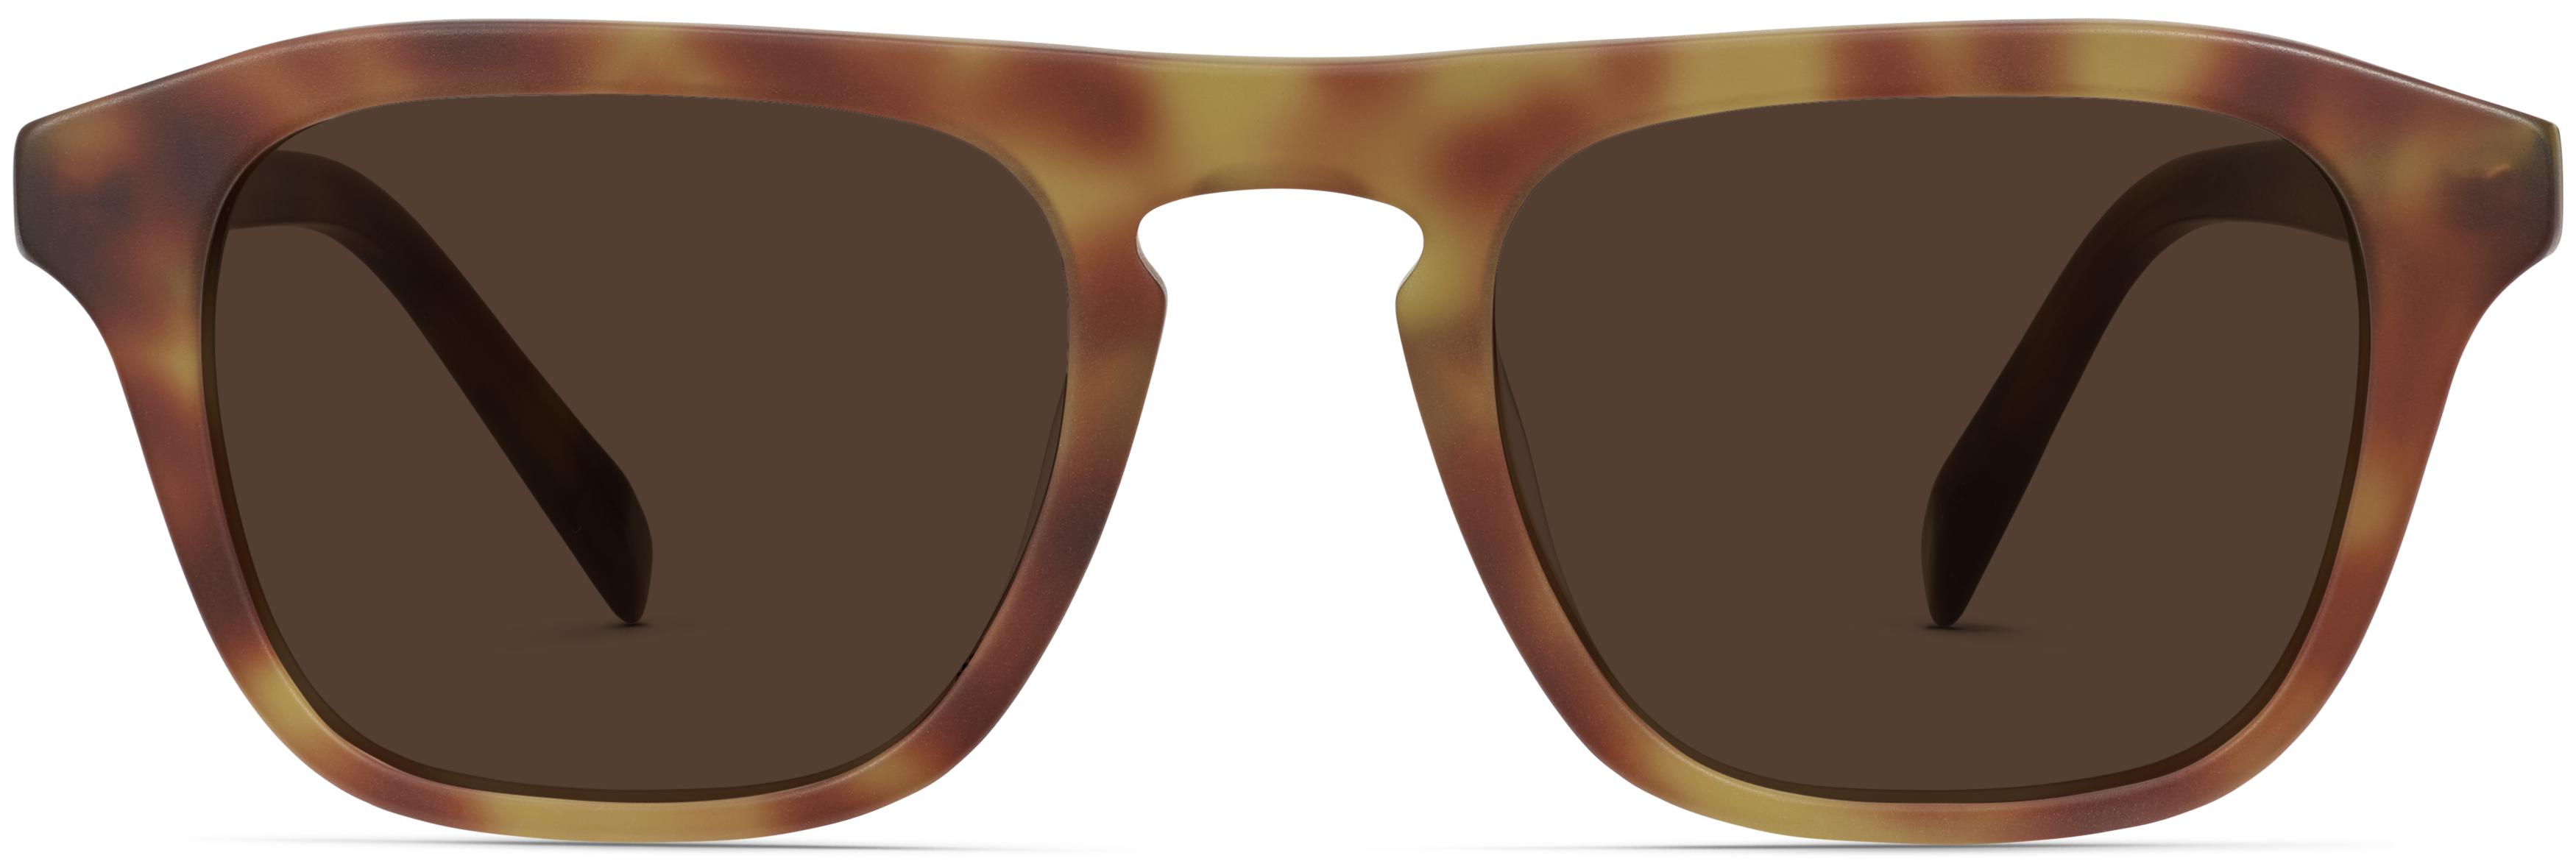 FuzWeb:DOLCE VISION Silver Mirror Sunglasses Men Luxury er Shades Oculos  Male Metal Pilo…